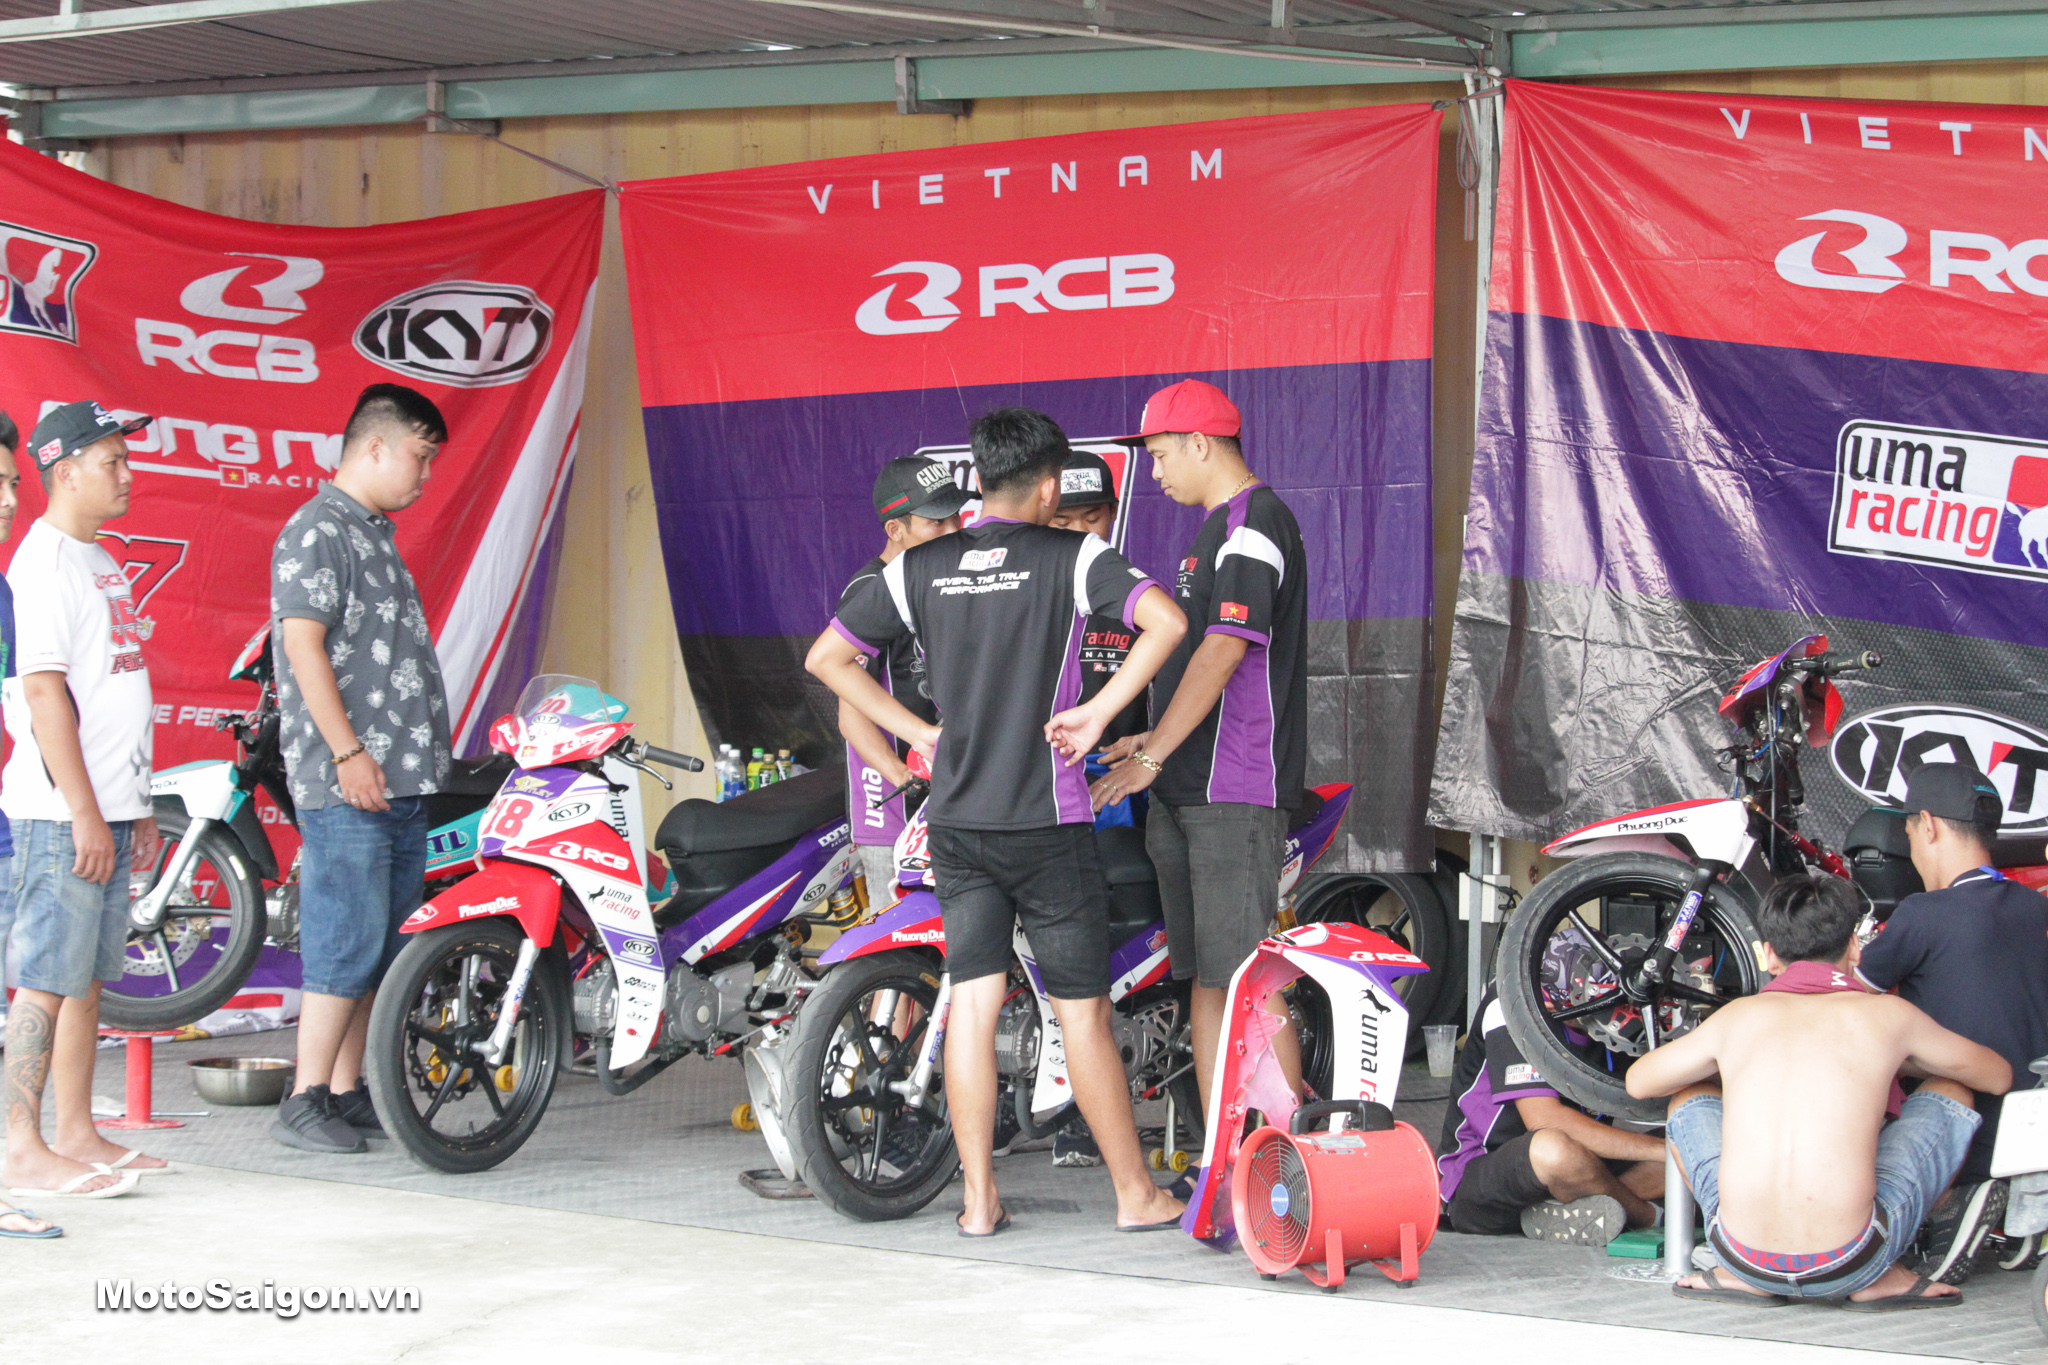 Đội KYT - RCB - UMA Racing